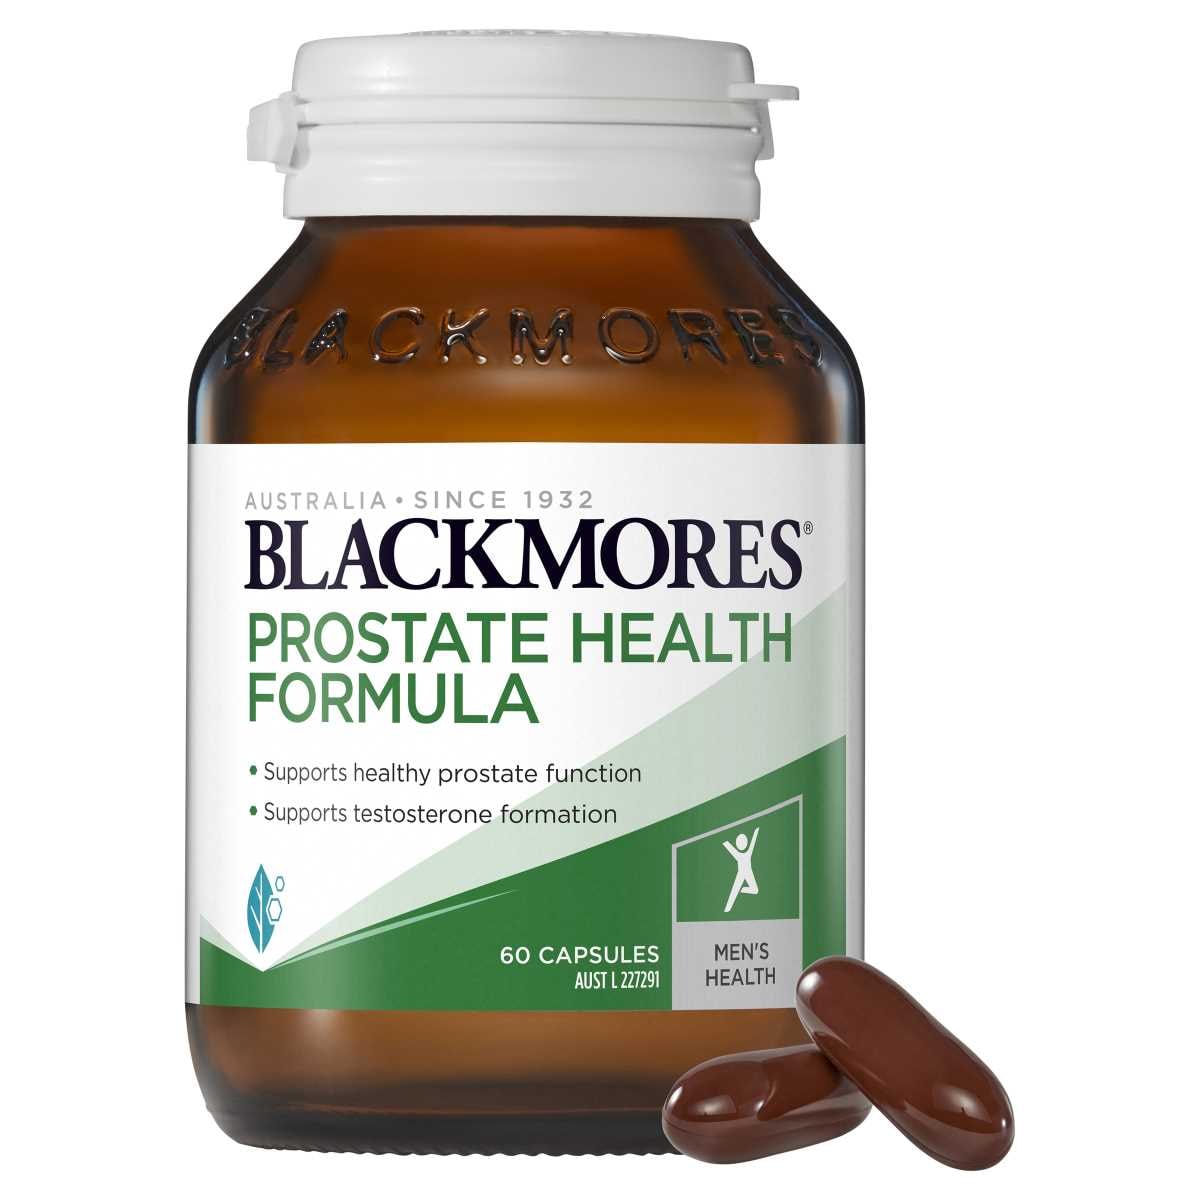 Blackmores Prostate Health Formula 60 Capsules